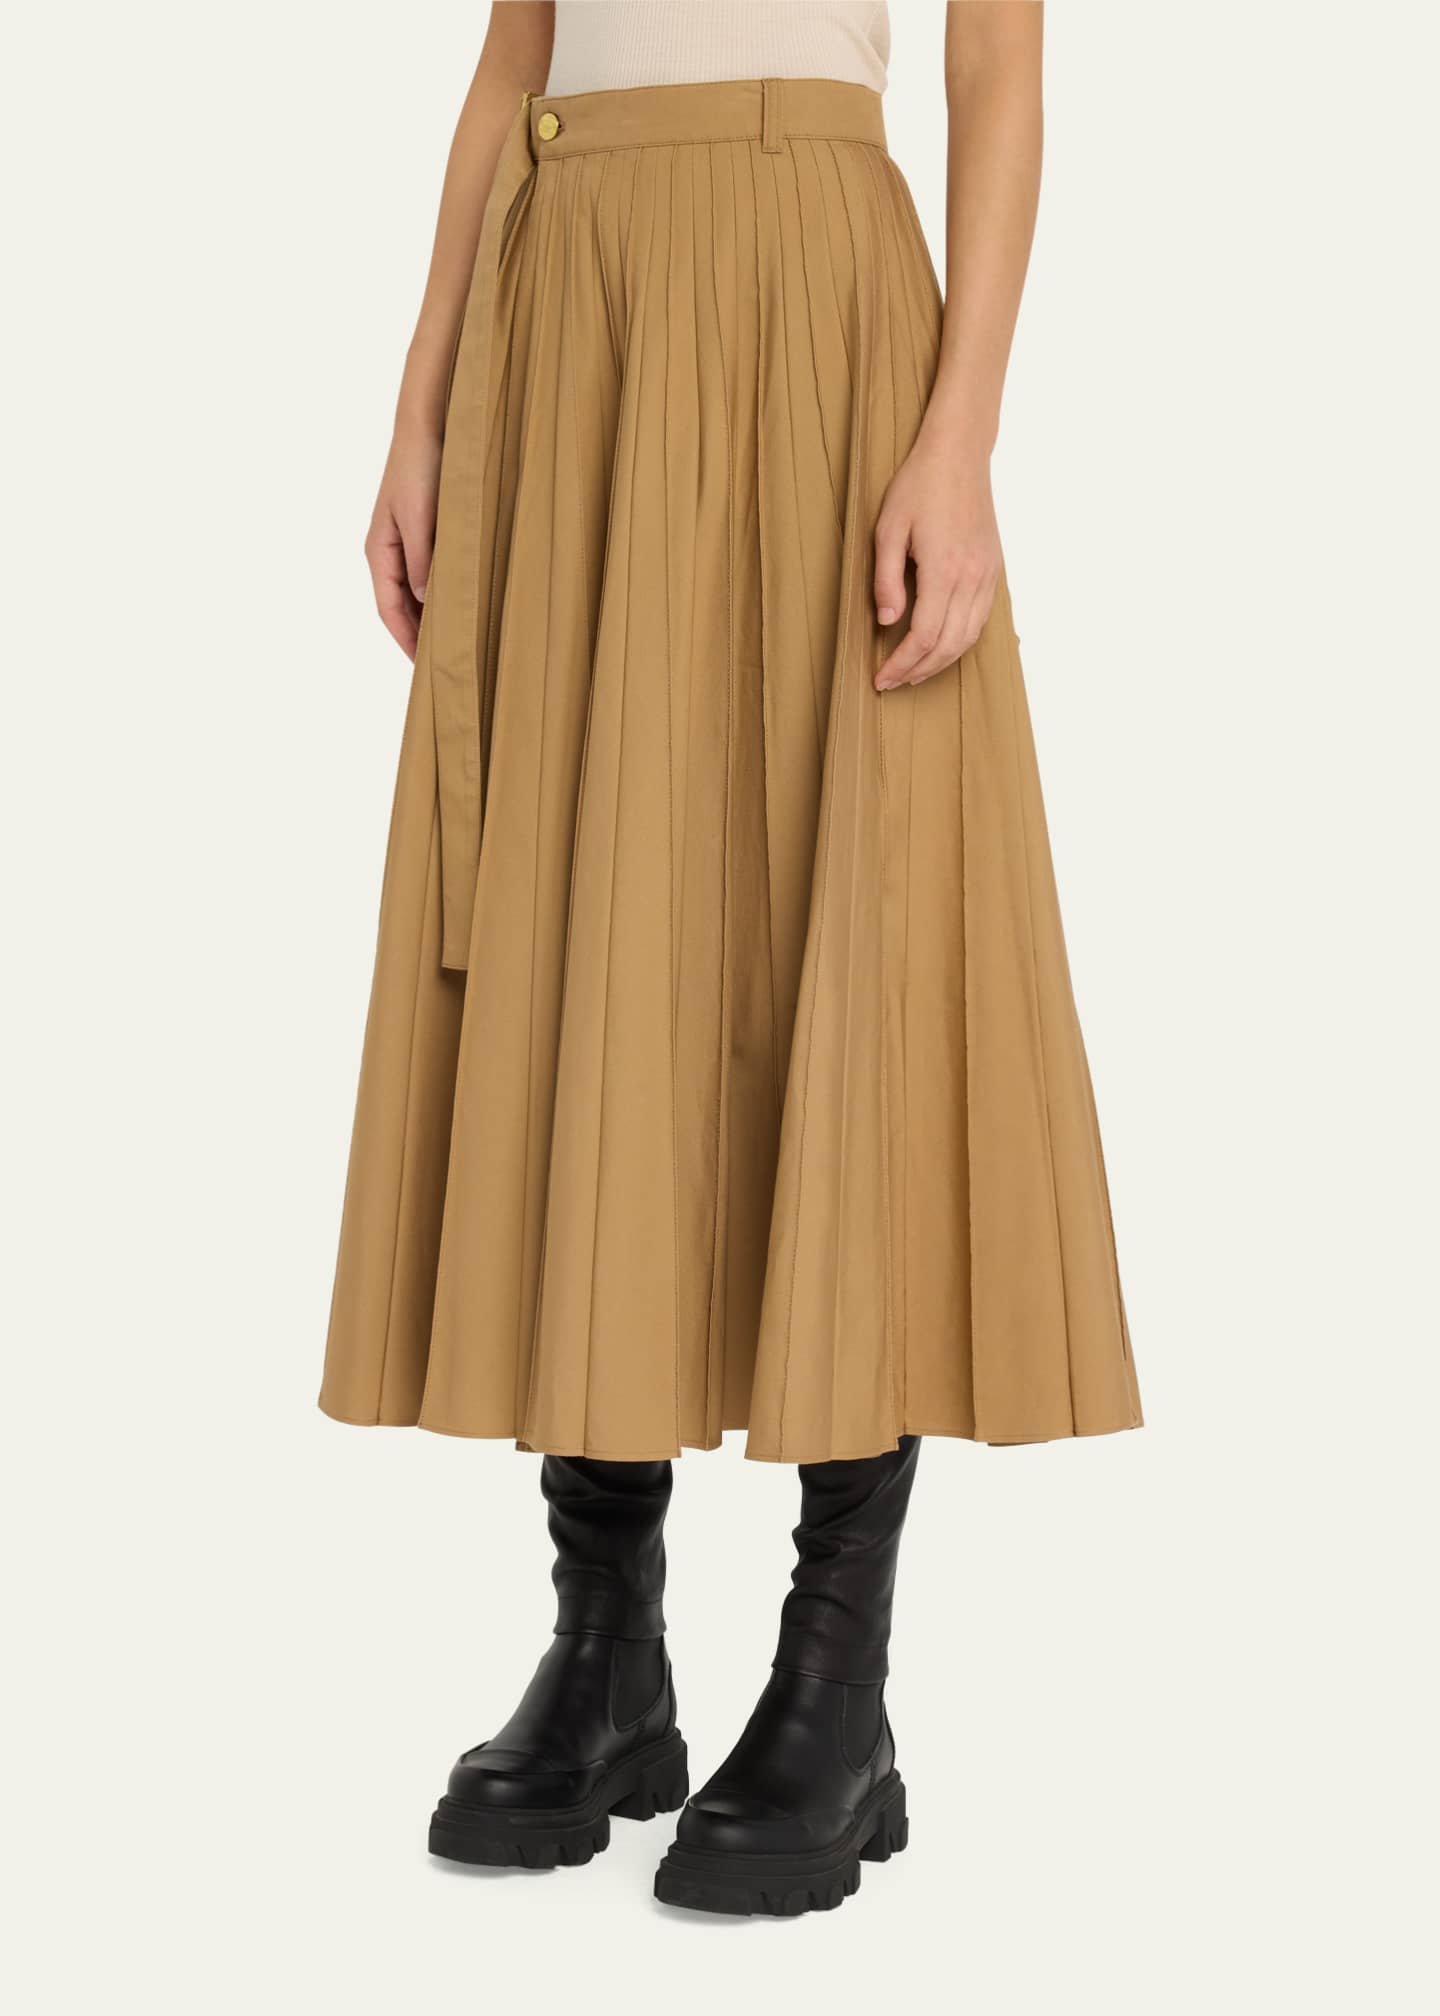 SACAI x Carhartt WIP Pleated Midi Skirt with Belt